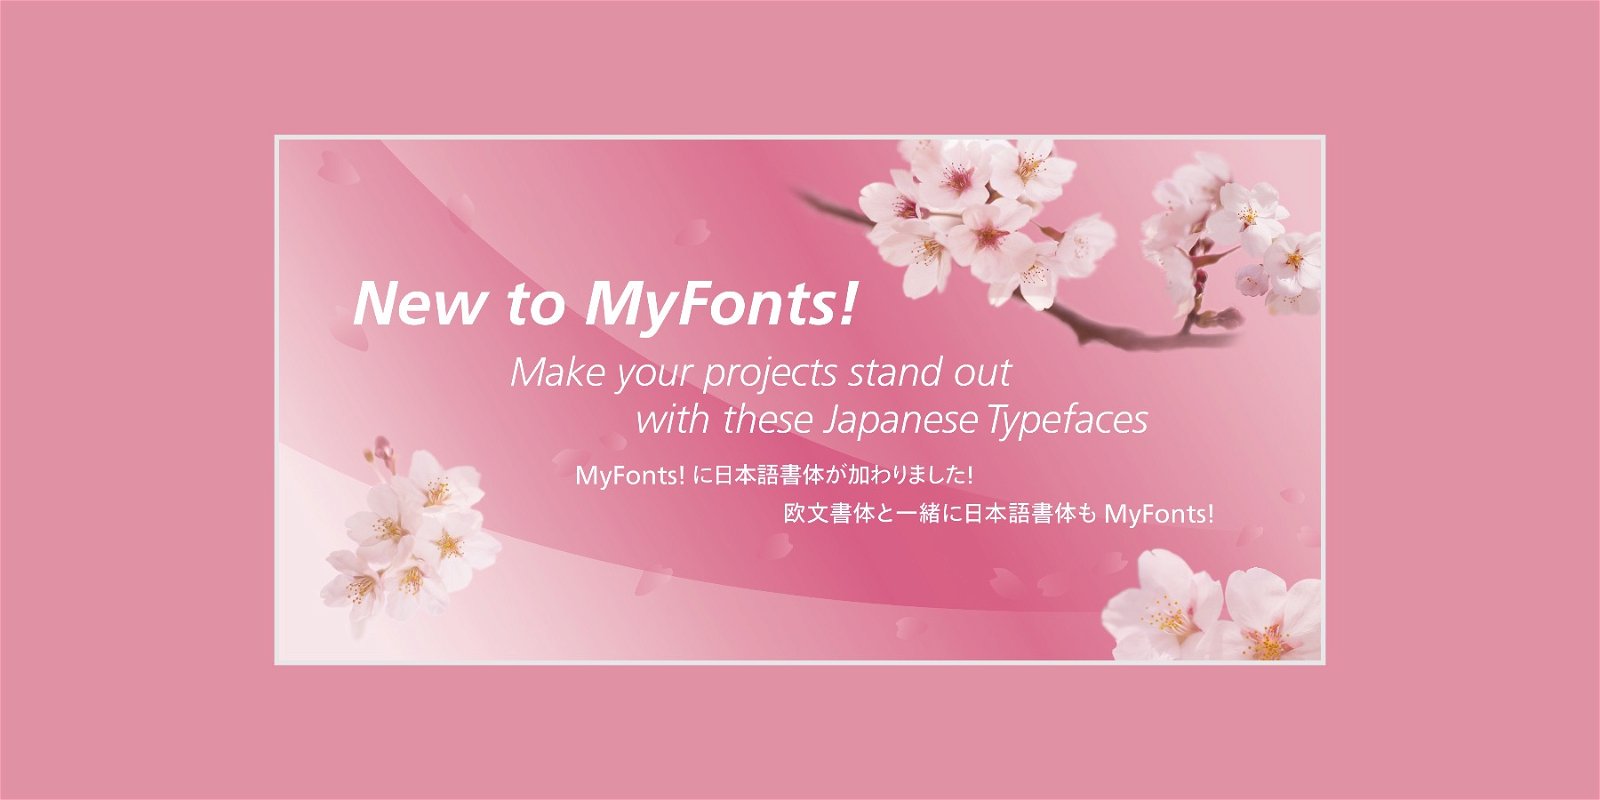 Japanese Typefaces